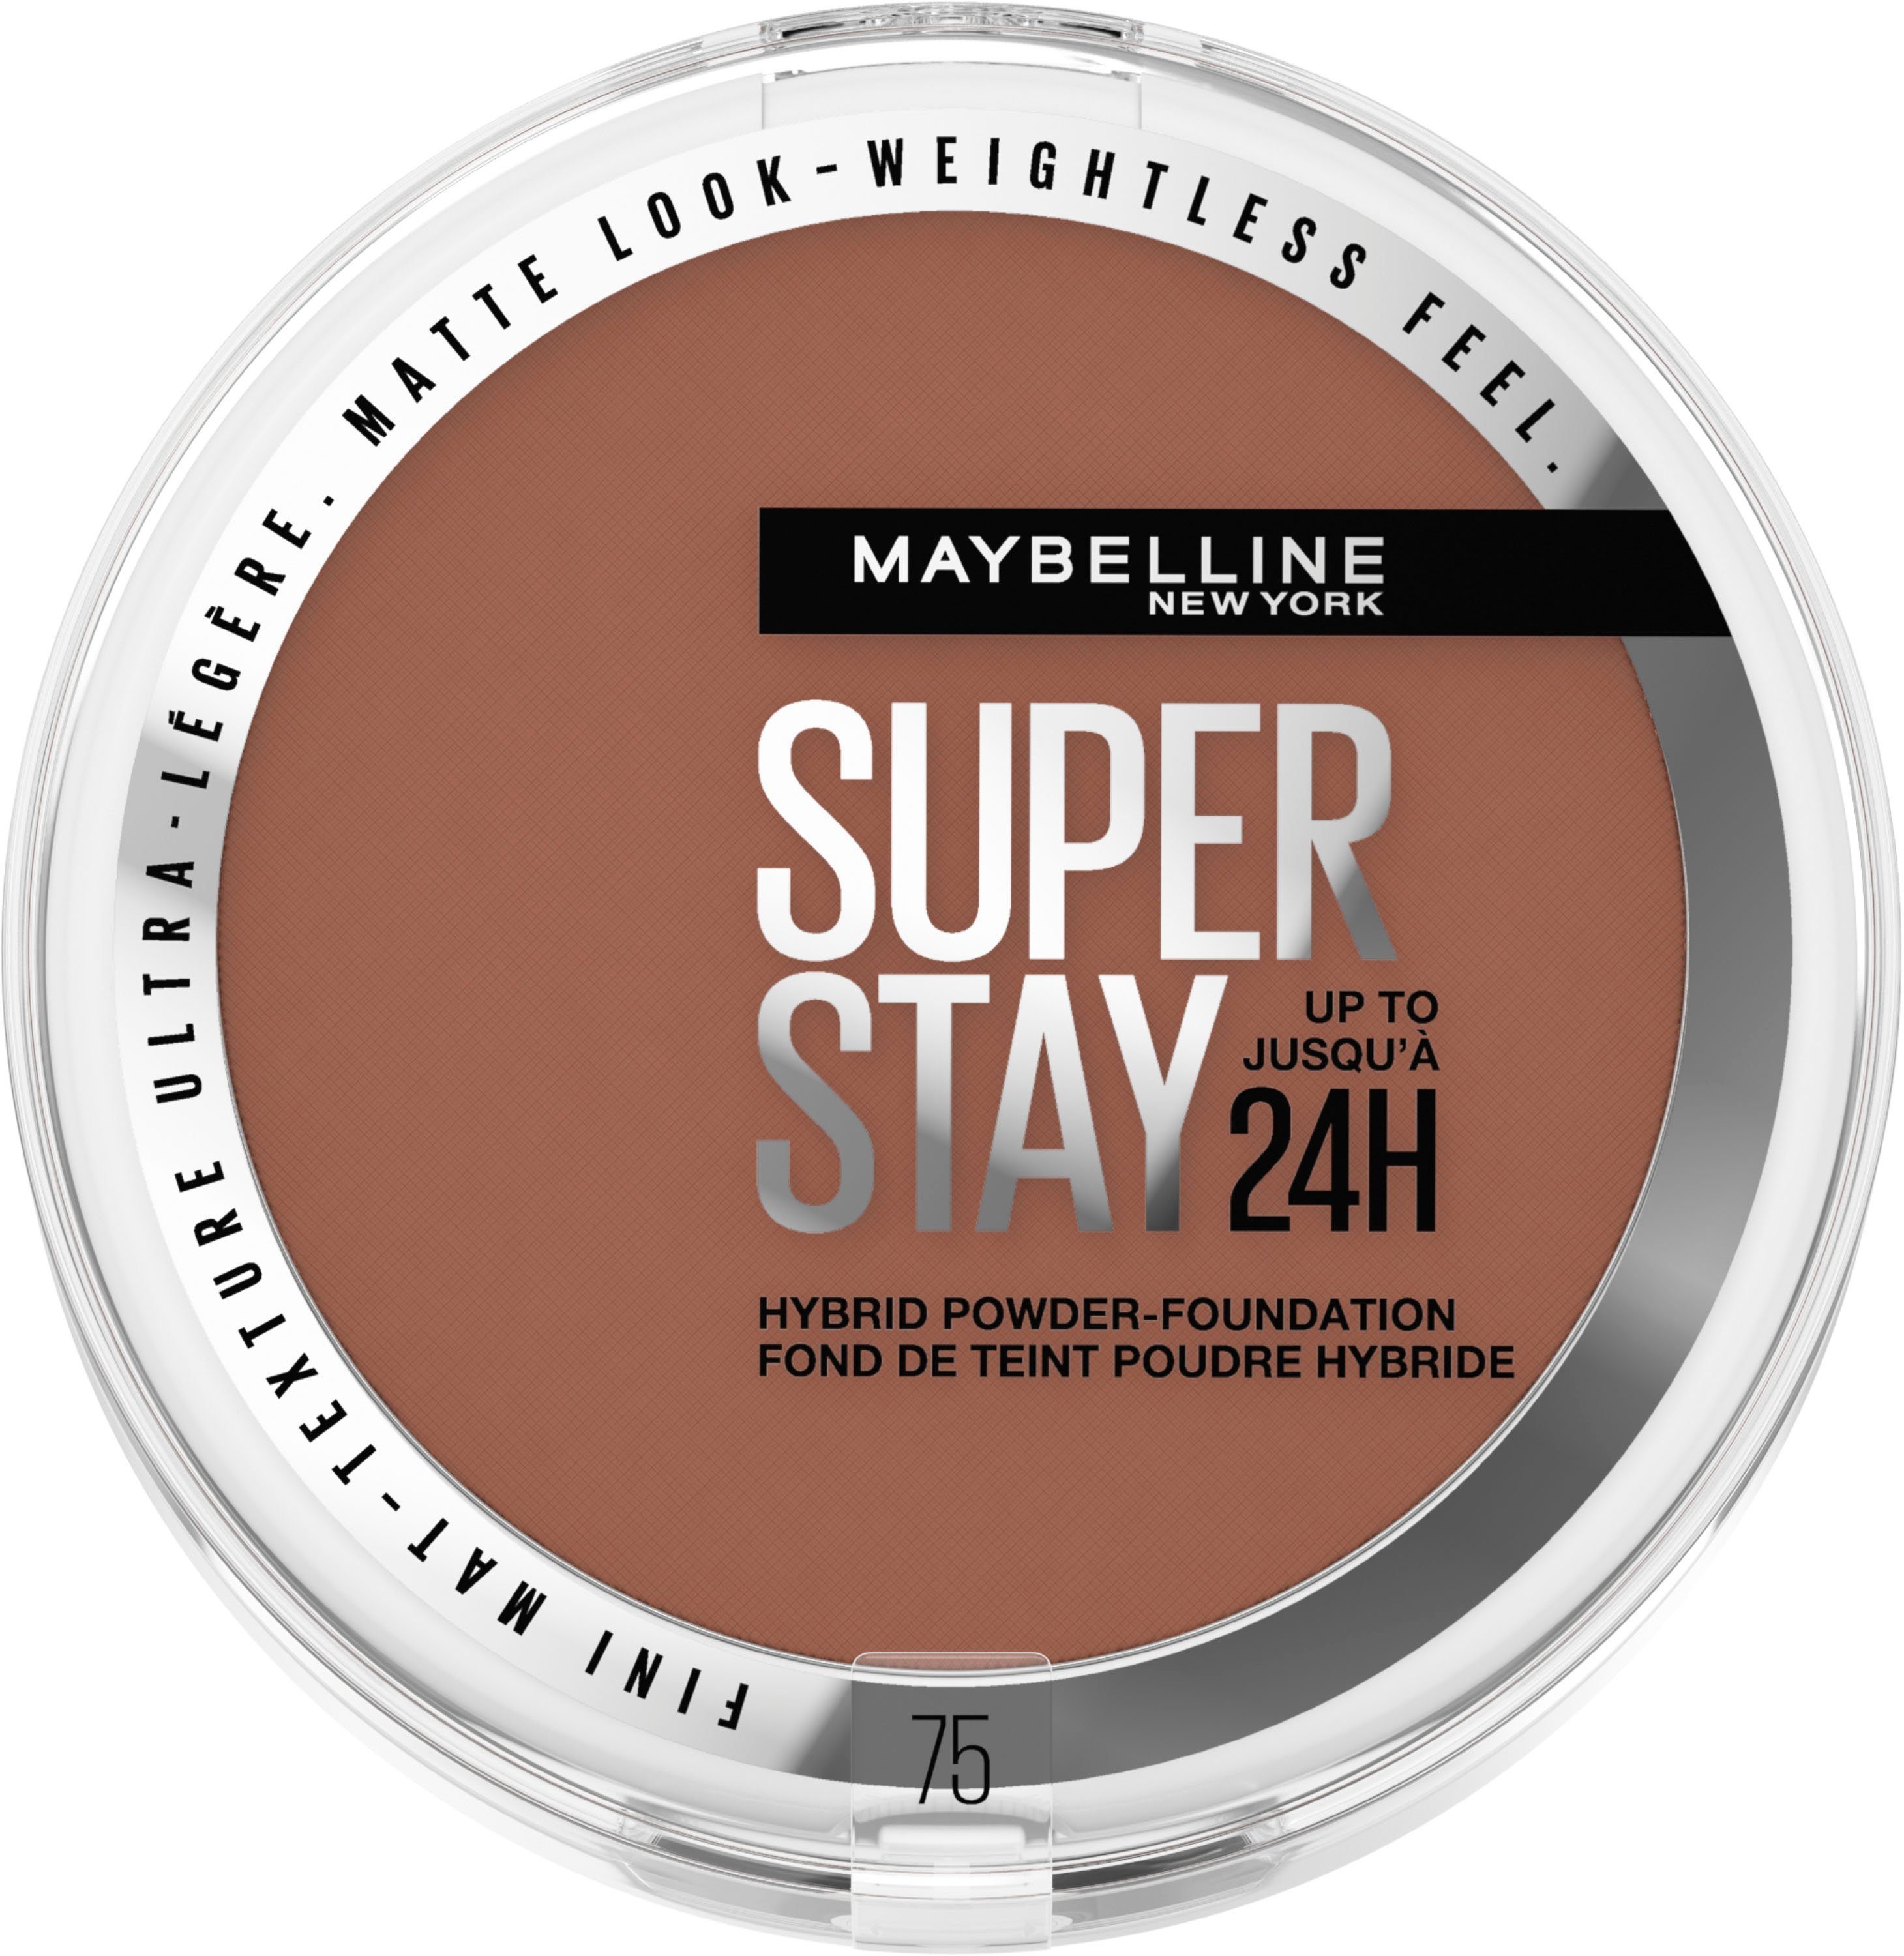 Super Stay YORK NEW New Puder MAYBELLINE Maybelline Make-Up York Hybrides Foundation